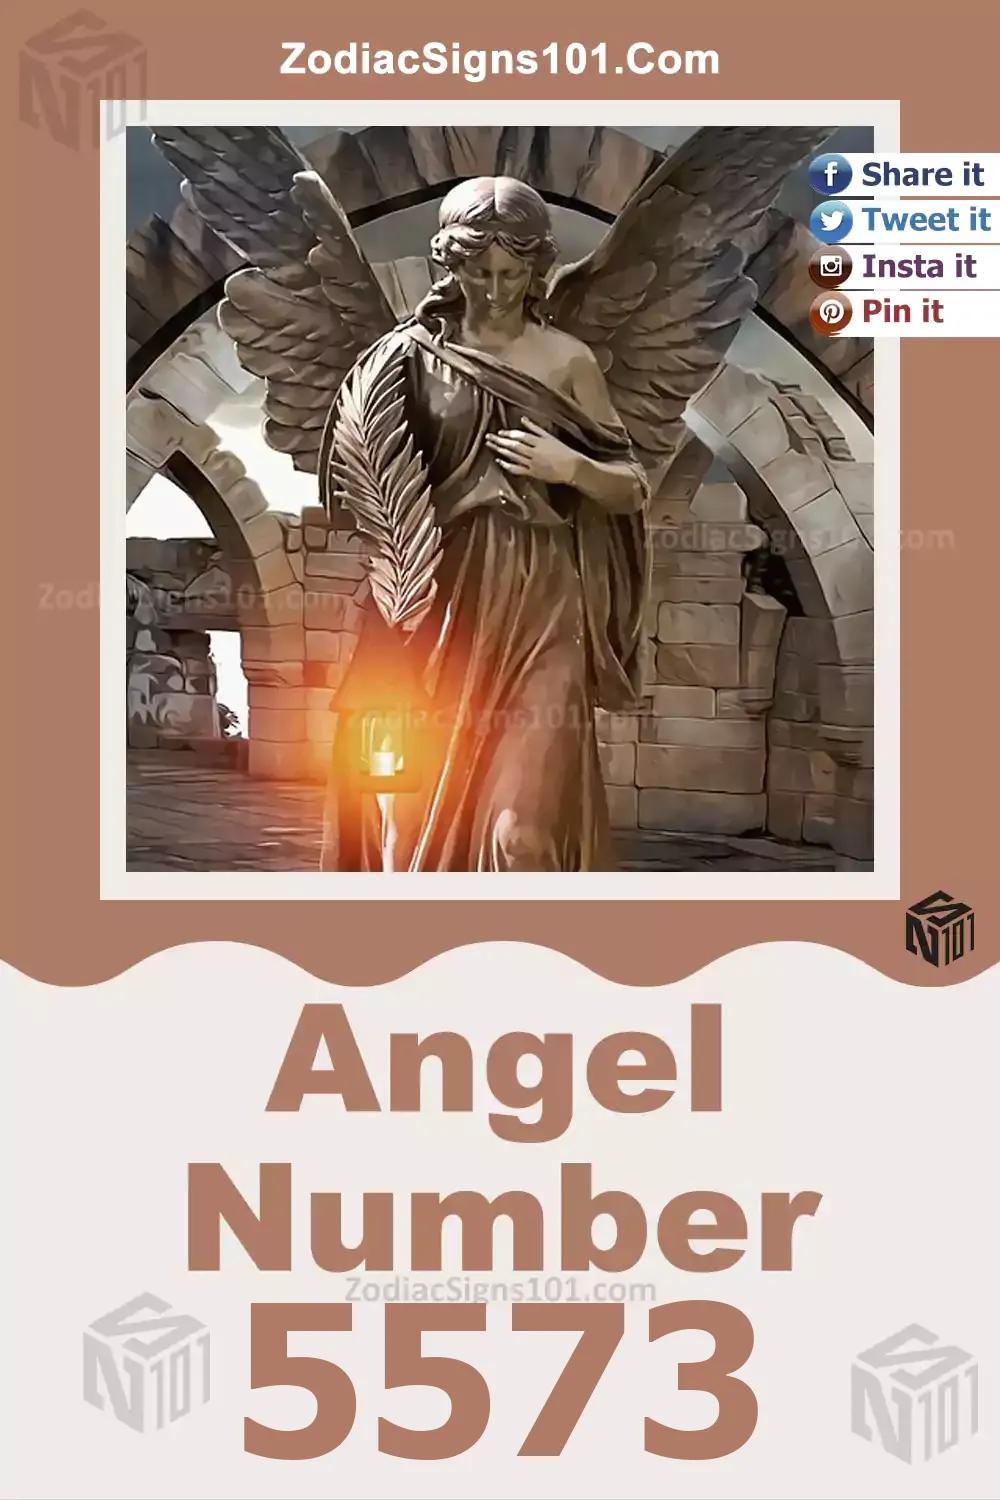 5573-Angel-Number-Meaning.jpg